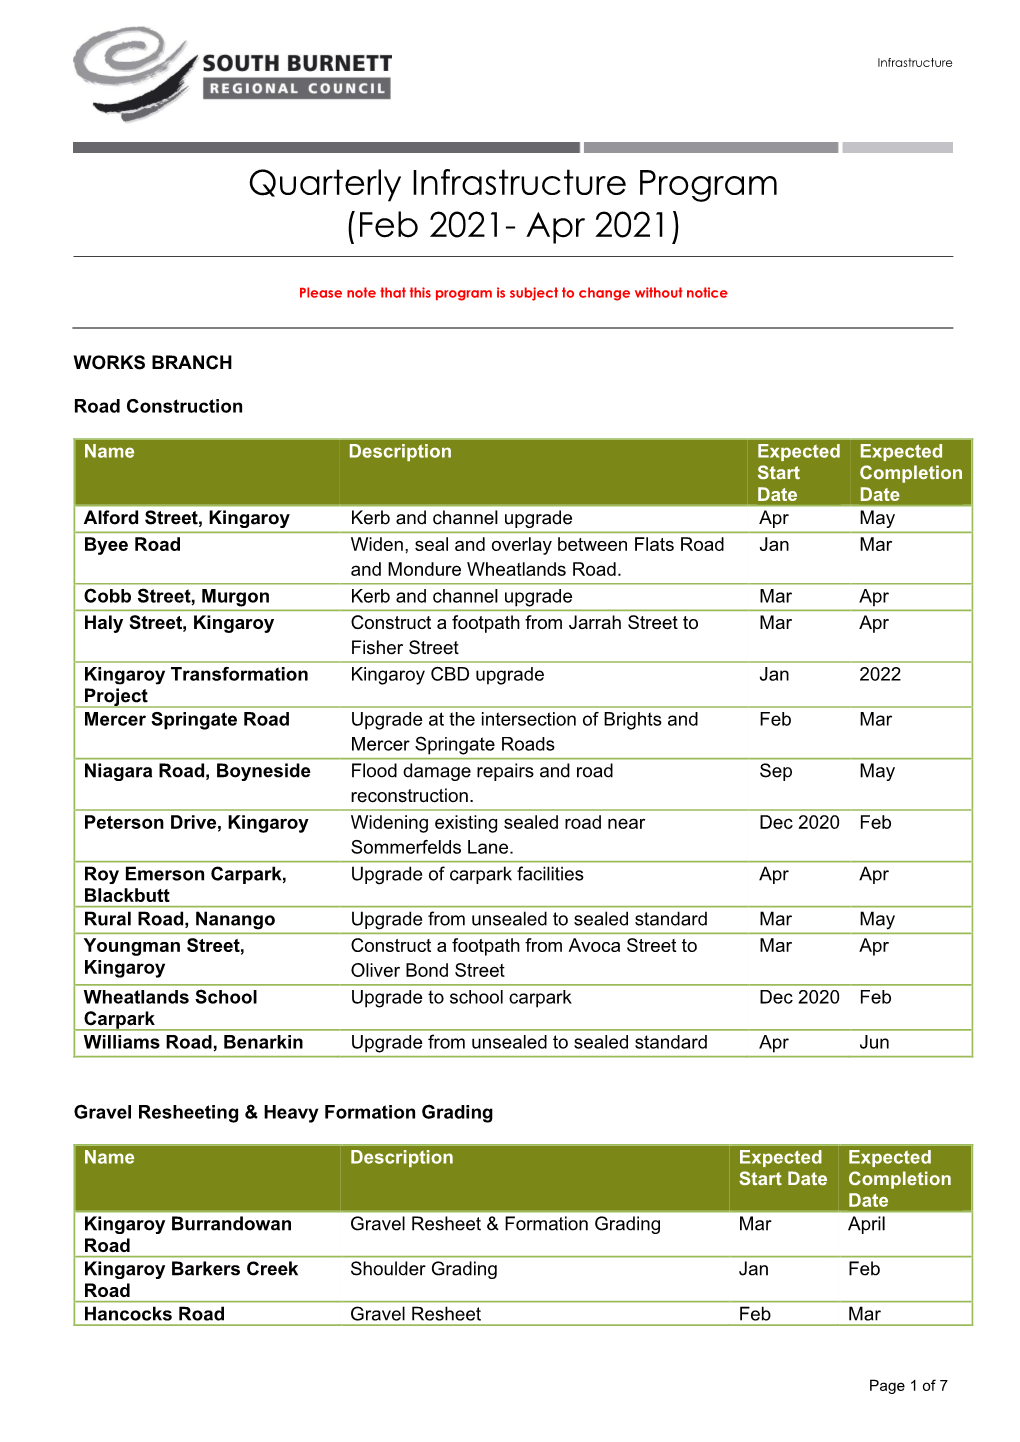 Quarterly Infrastructure Program (Feb 2021- Apr 2021)